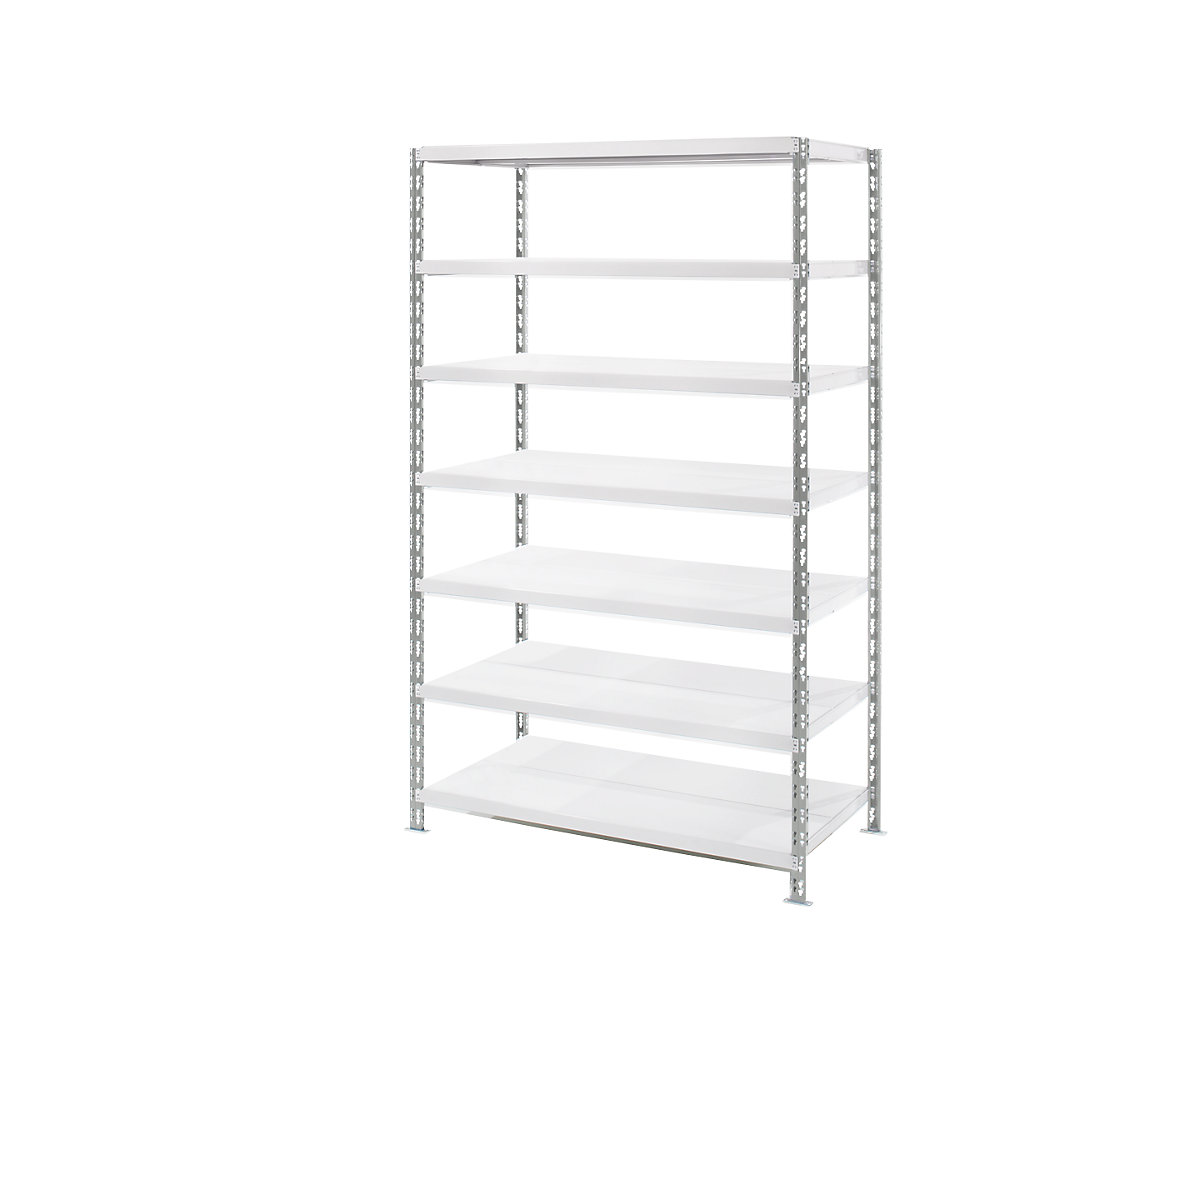 Wide span shelf unit with sheet steel shelves, depth 800 mm, standard shelf unit, HxW 2522 x 1550 mm